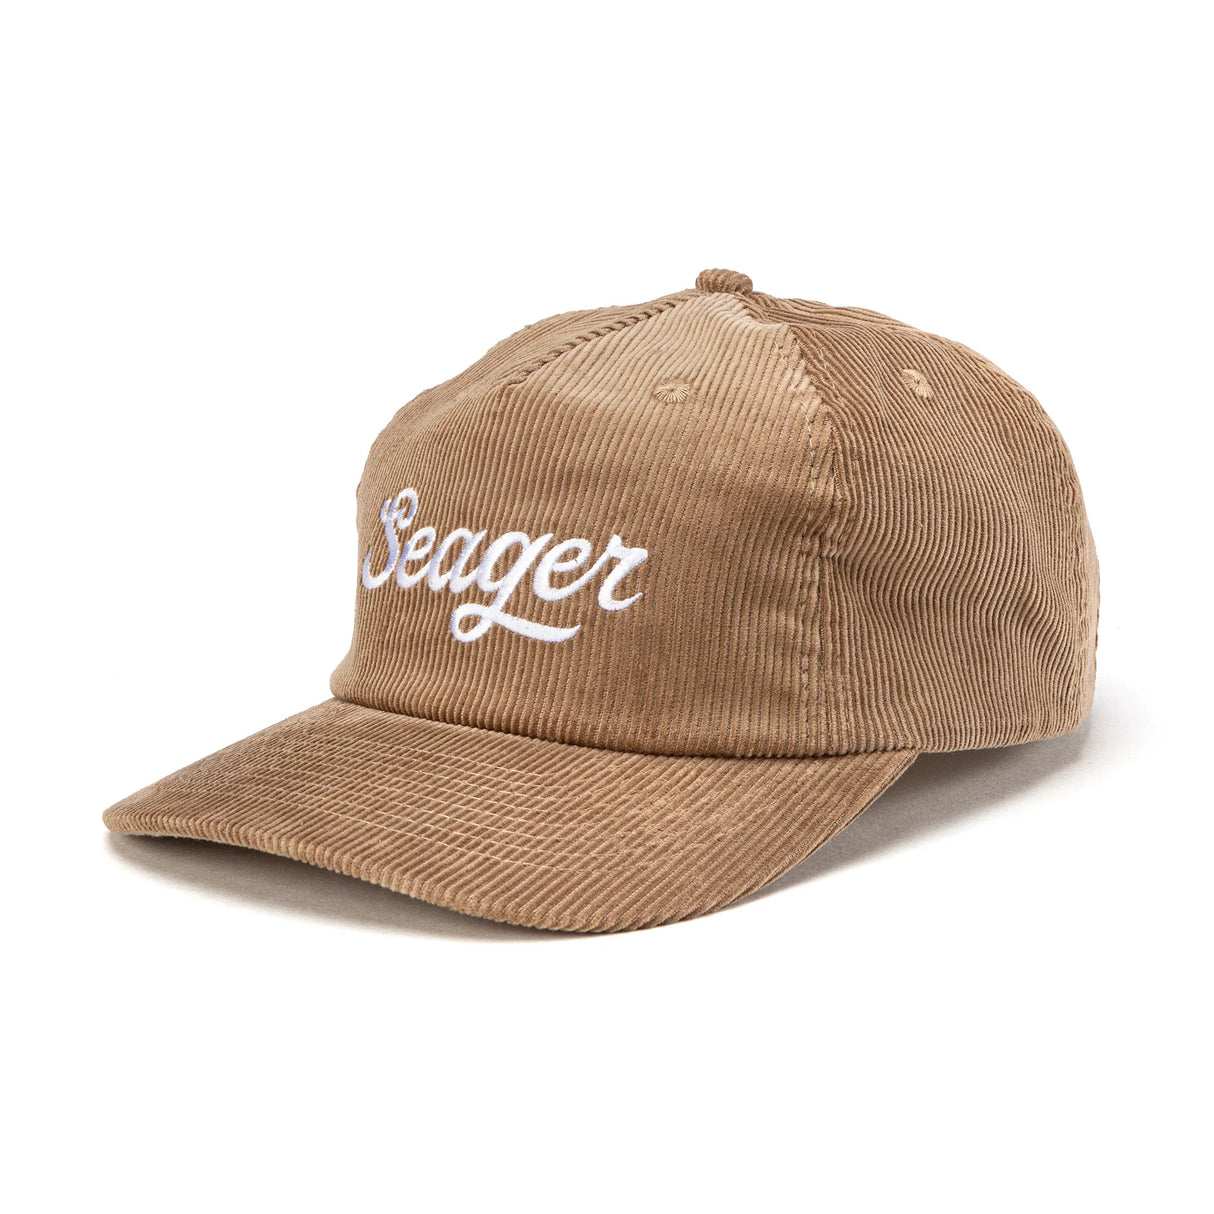 Seager Big Khak Corduroy Snapback Hat